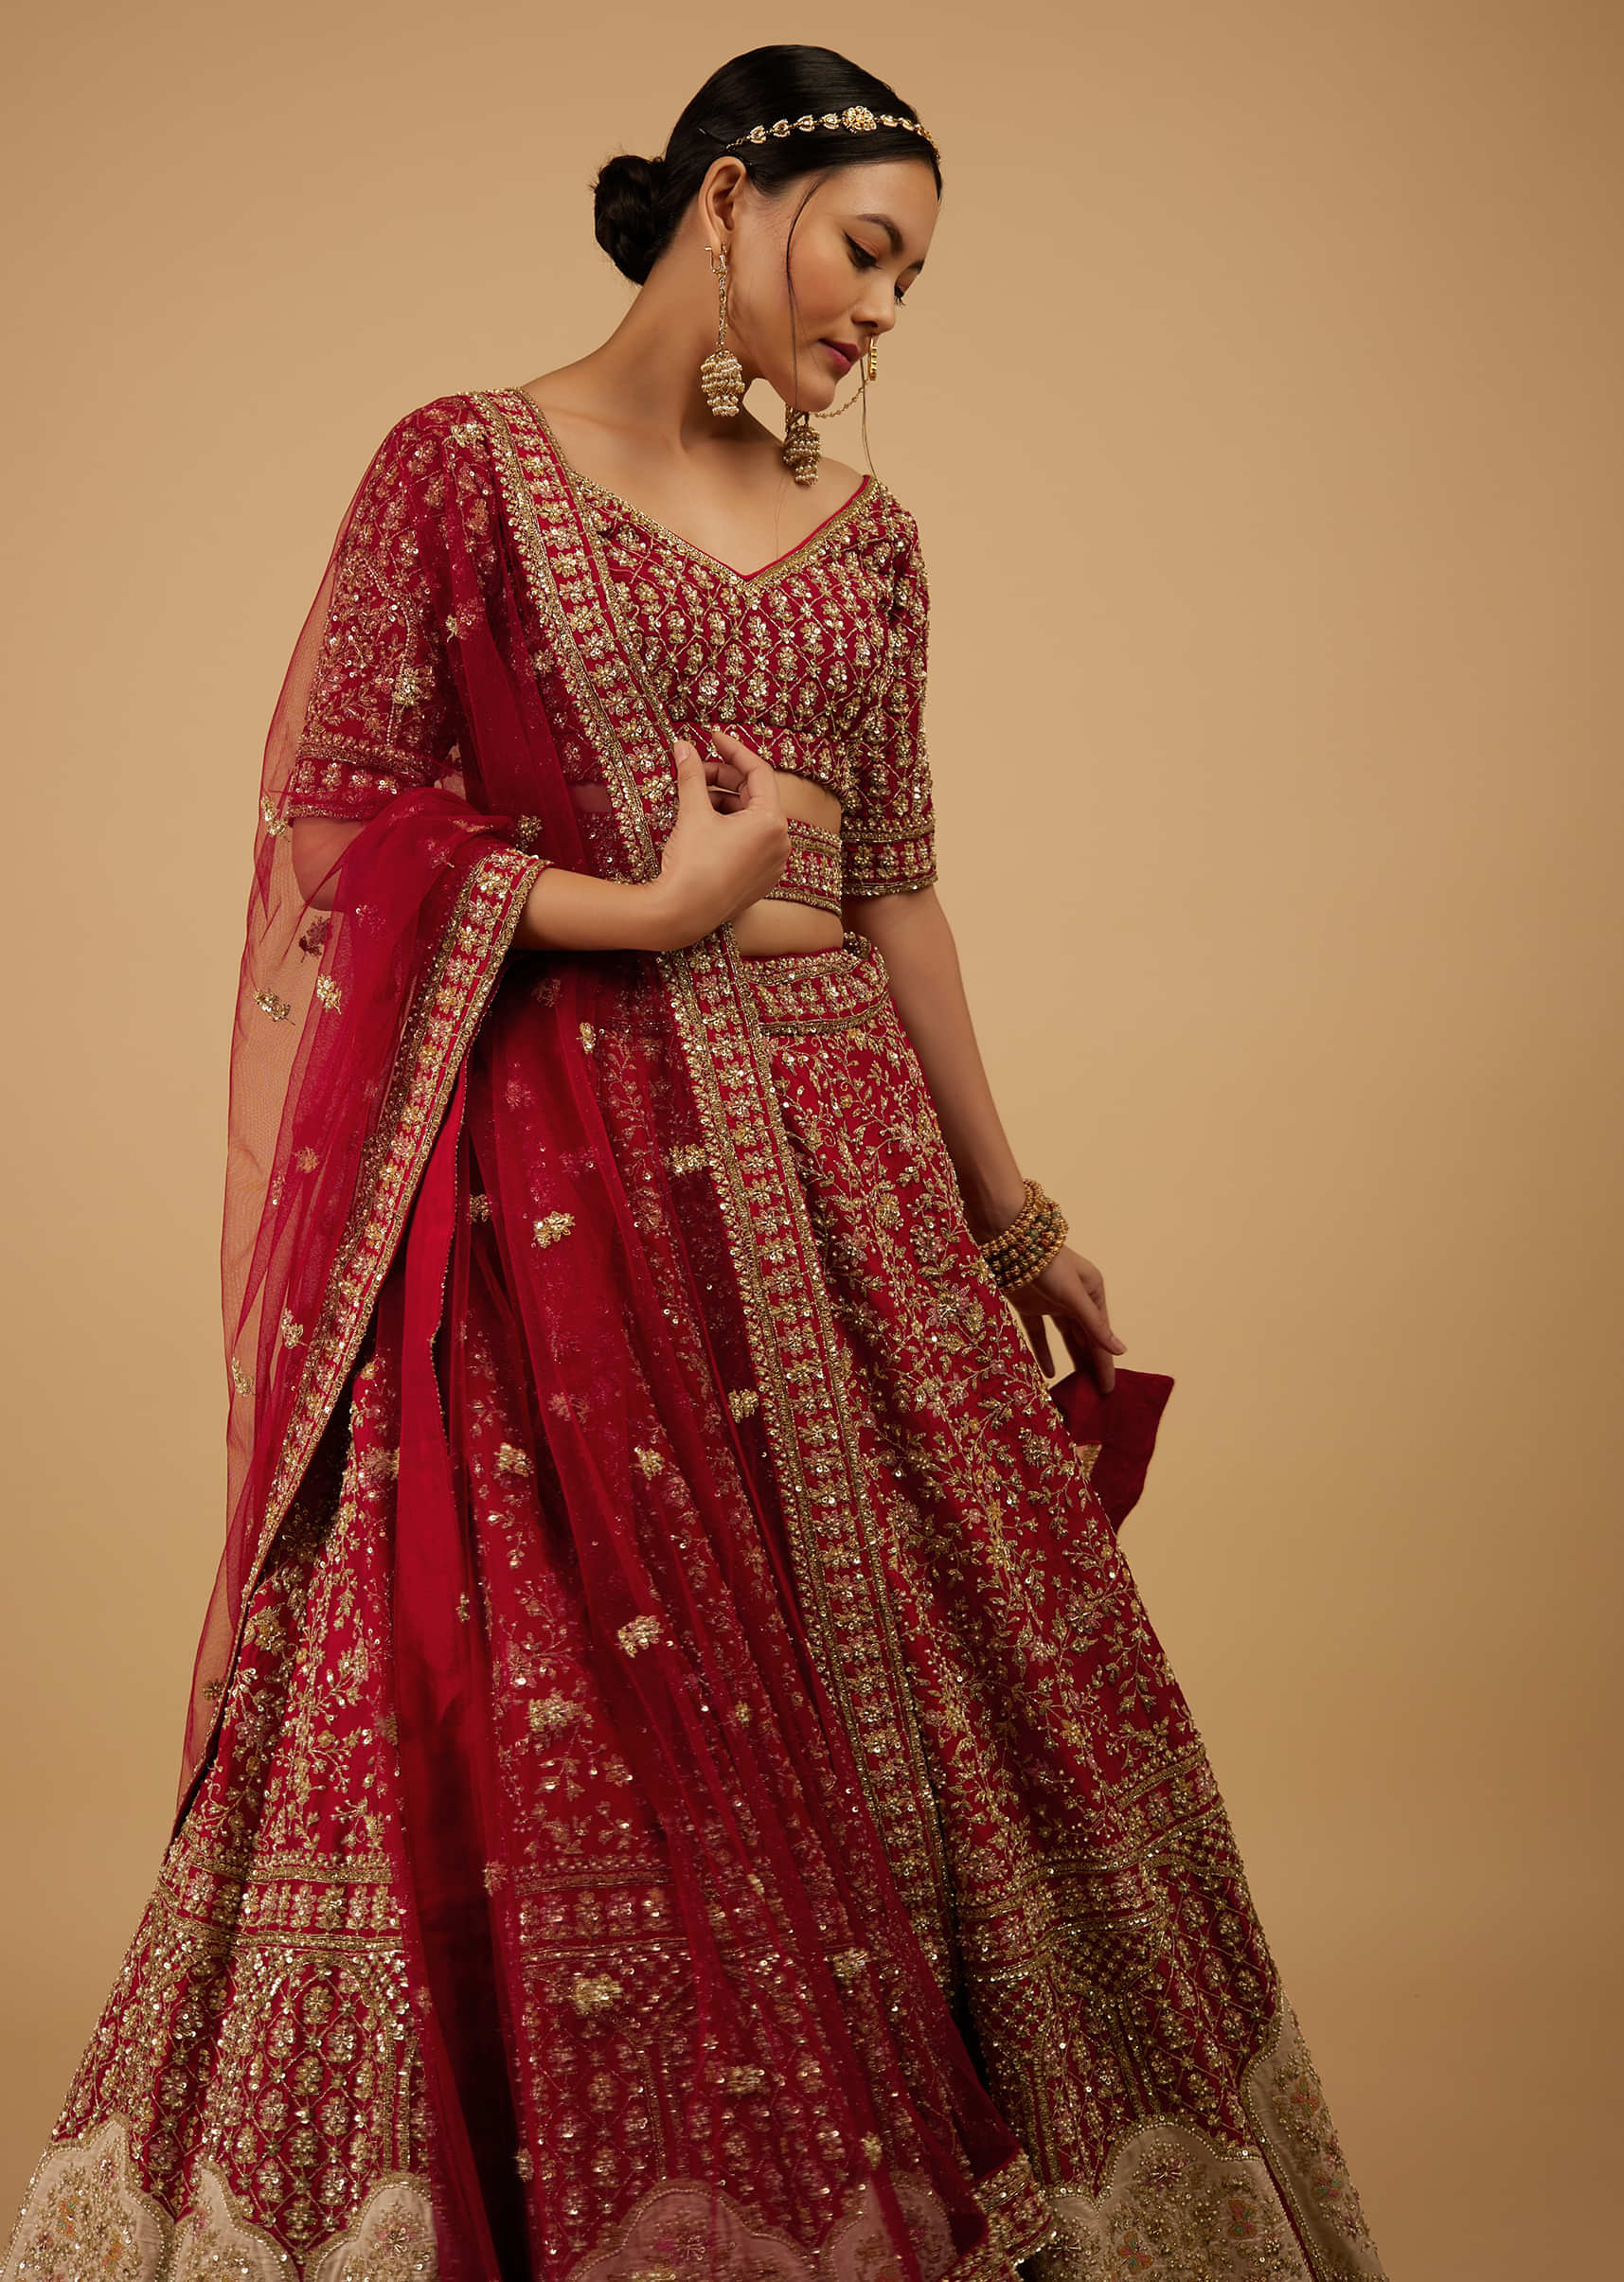 Bride And Baraat Apple Red Fully Embroidered Lavish Lehenga Choli With Belt